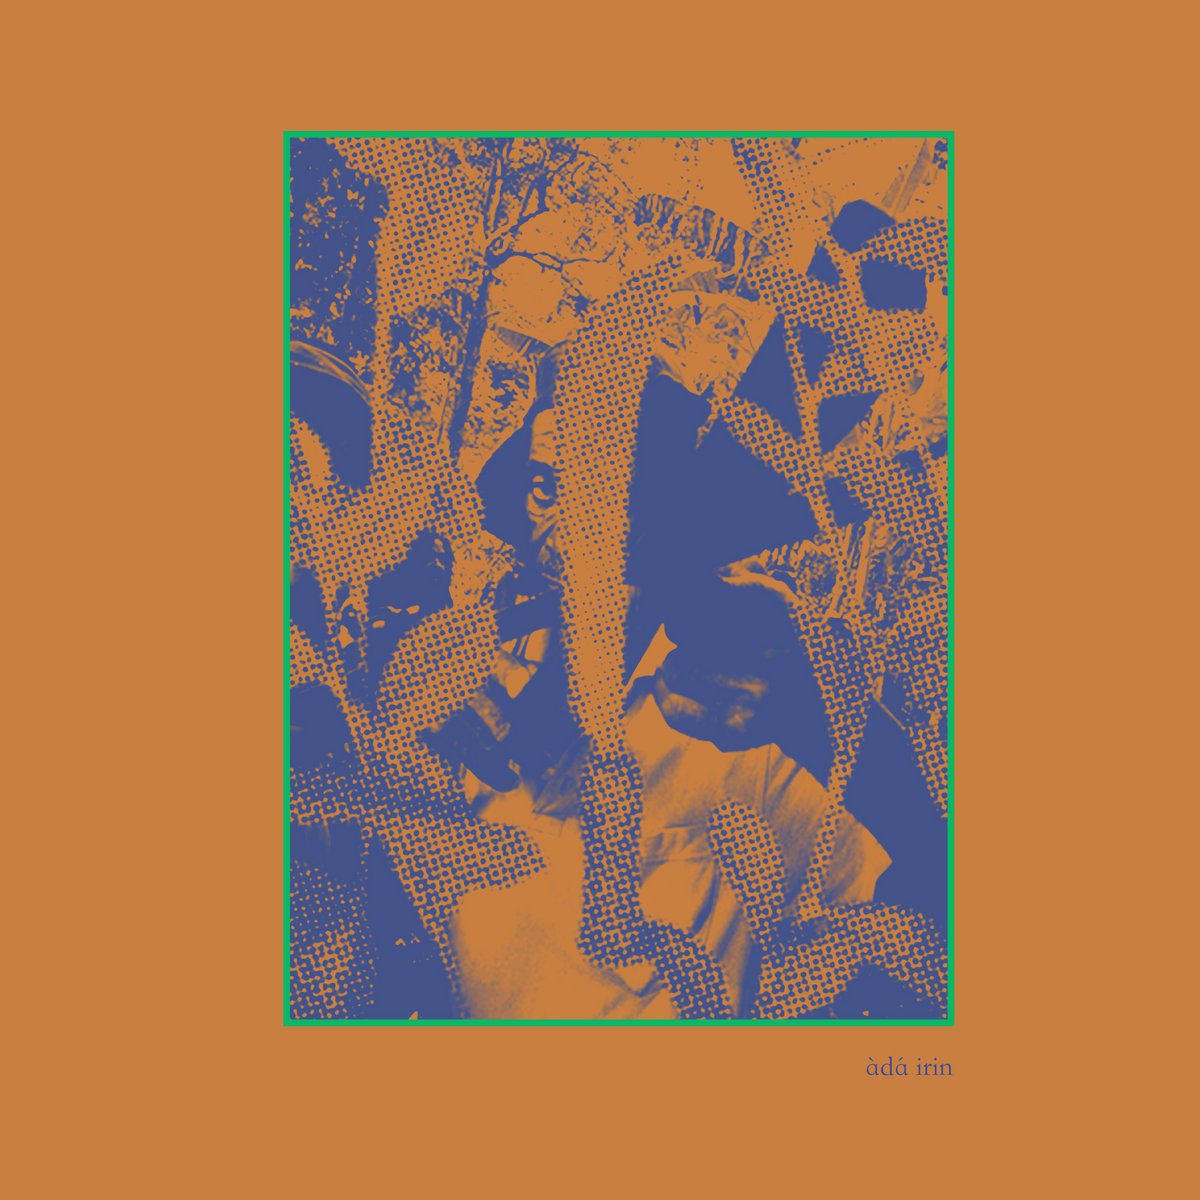 Navy Blue Releases Debut Album 'Àdá Irin'